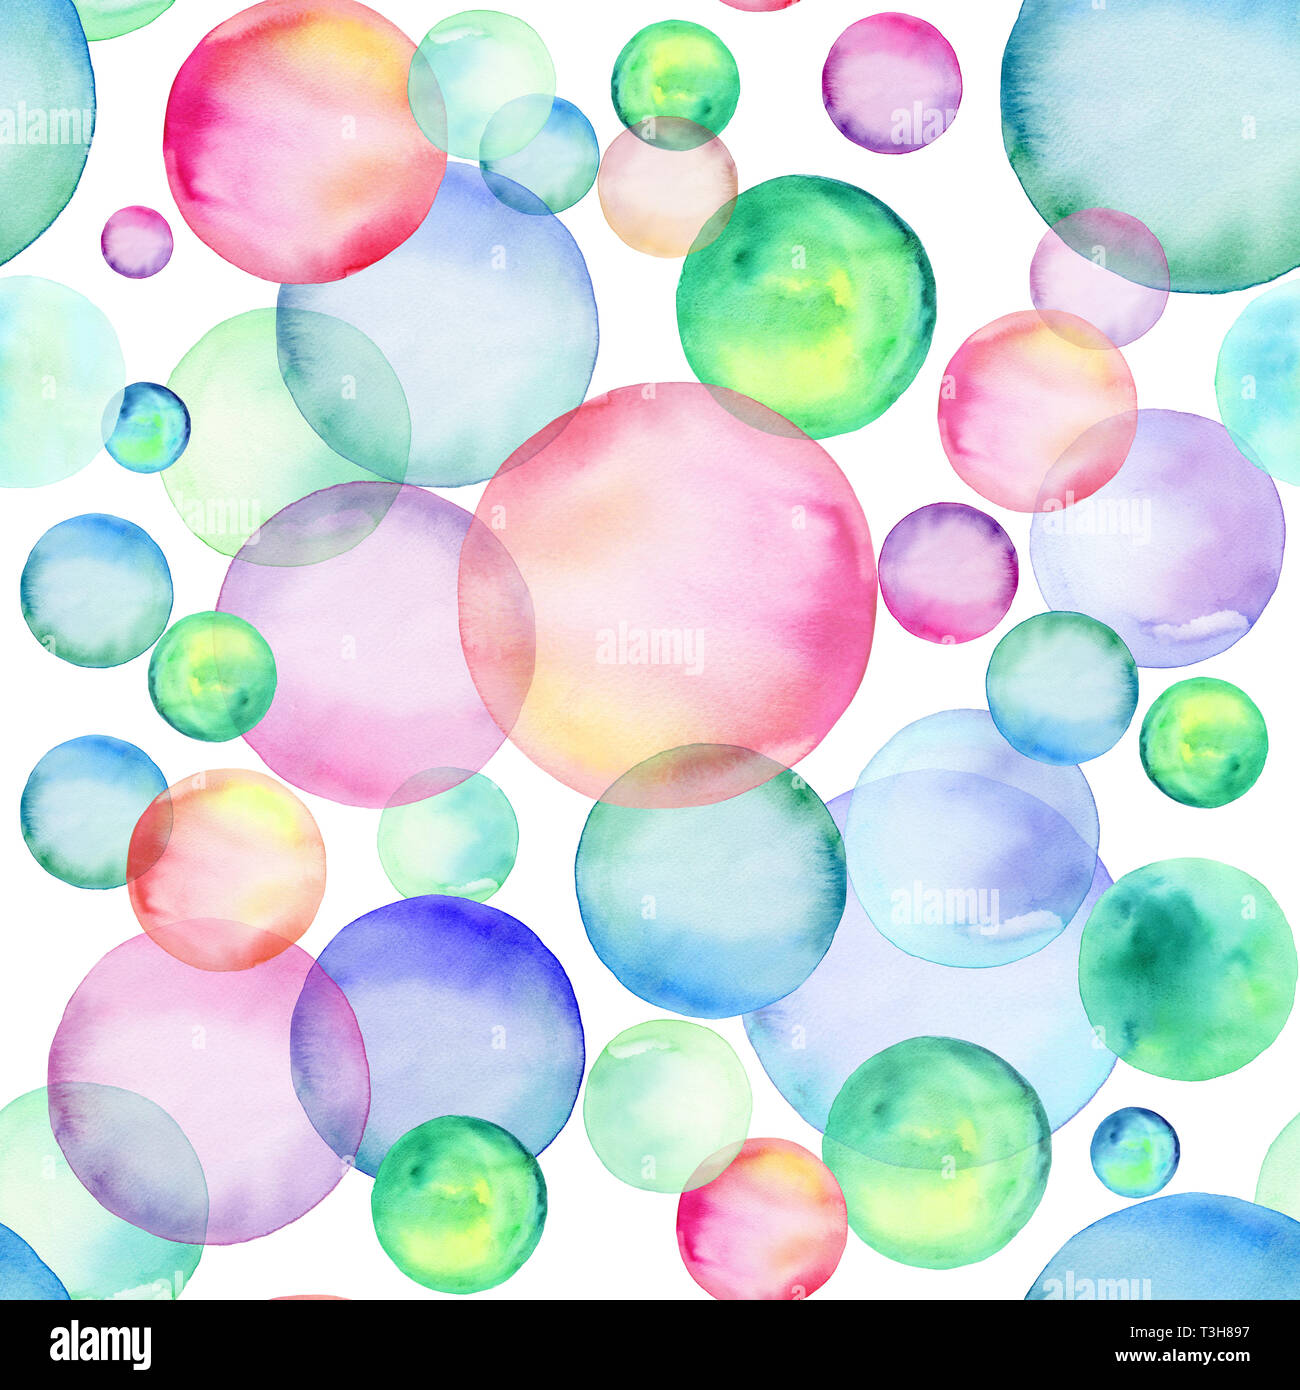 Farbige Aquarell kreisen. Nahtlose Muster. Rainbow Bubbles. Handgezeichneten Illustrationen. Stockfoto